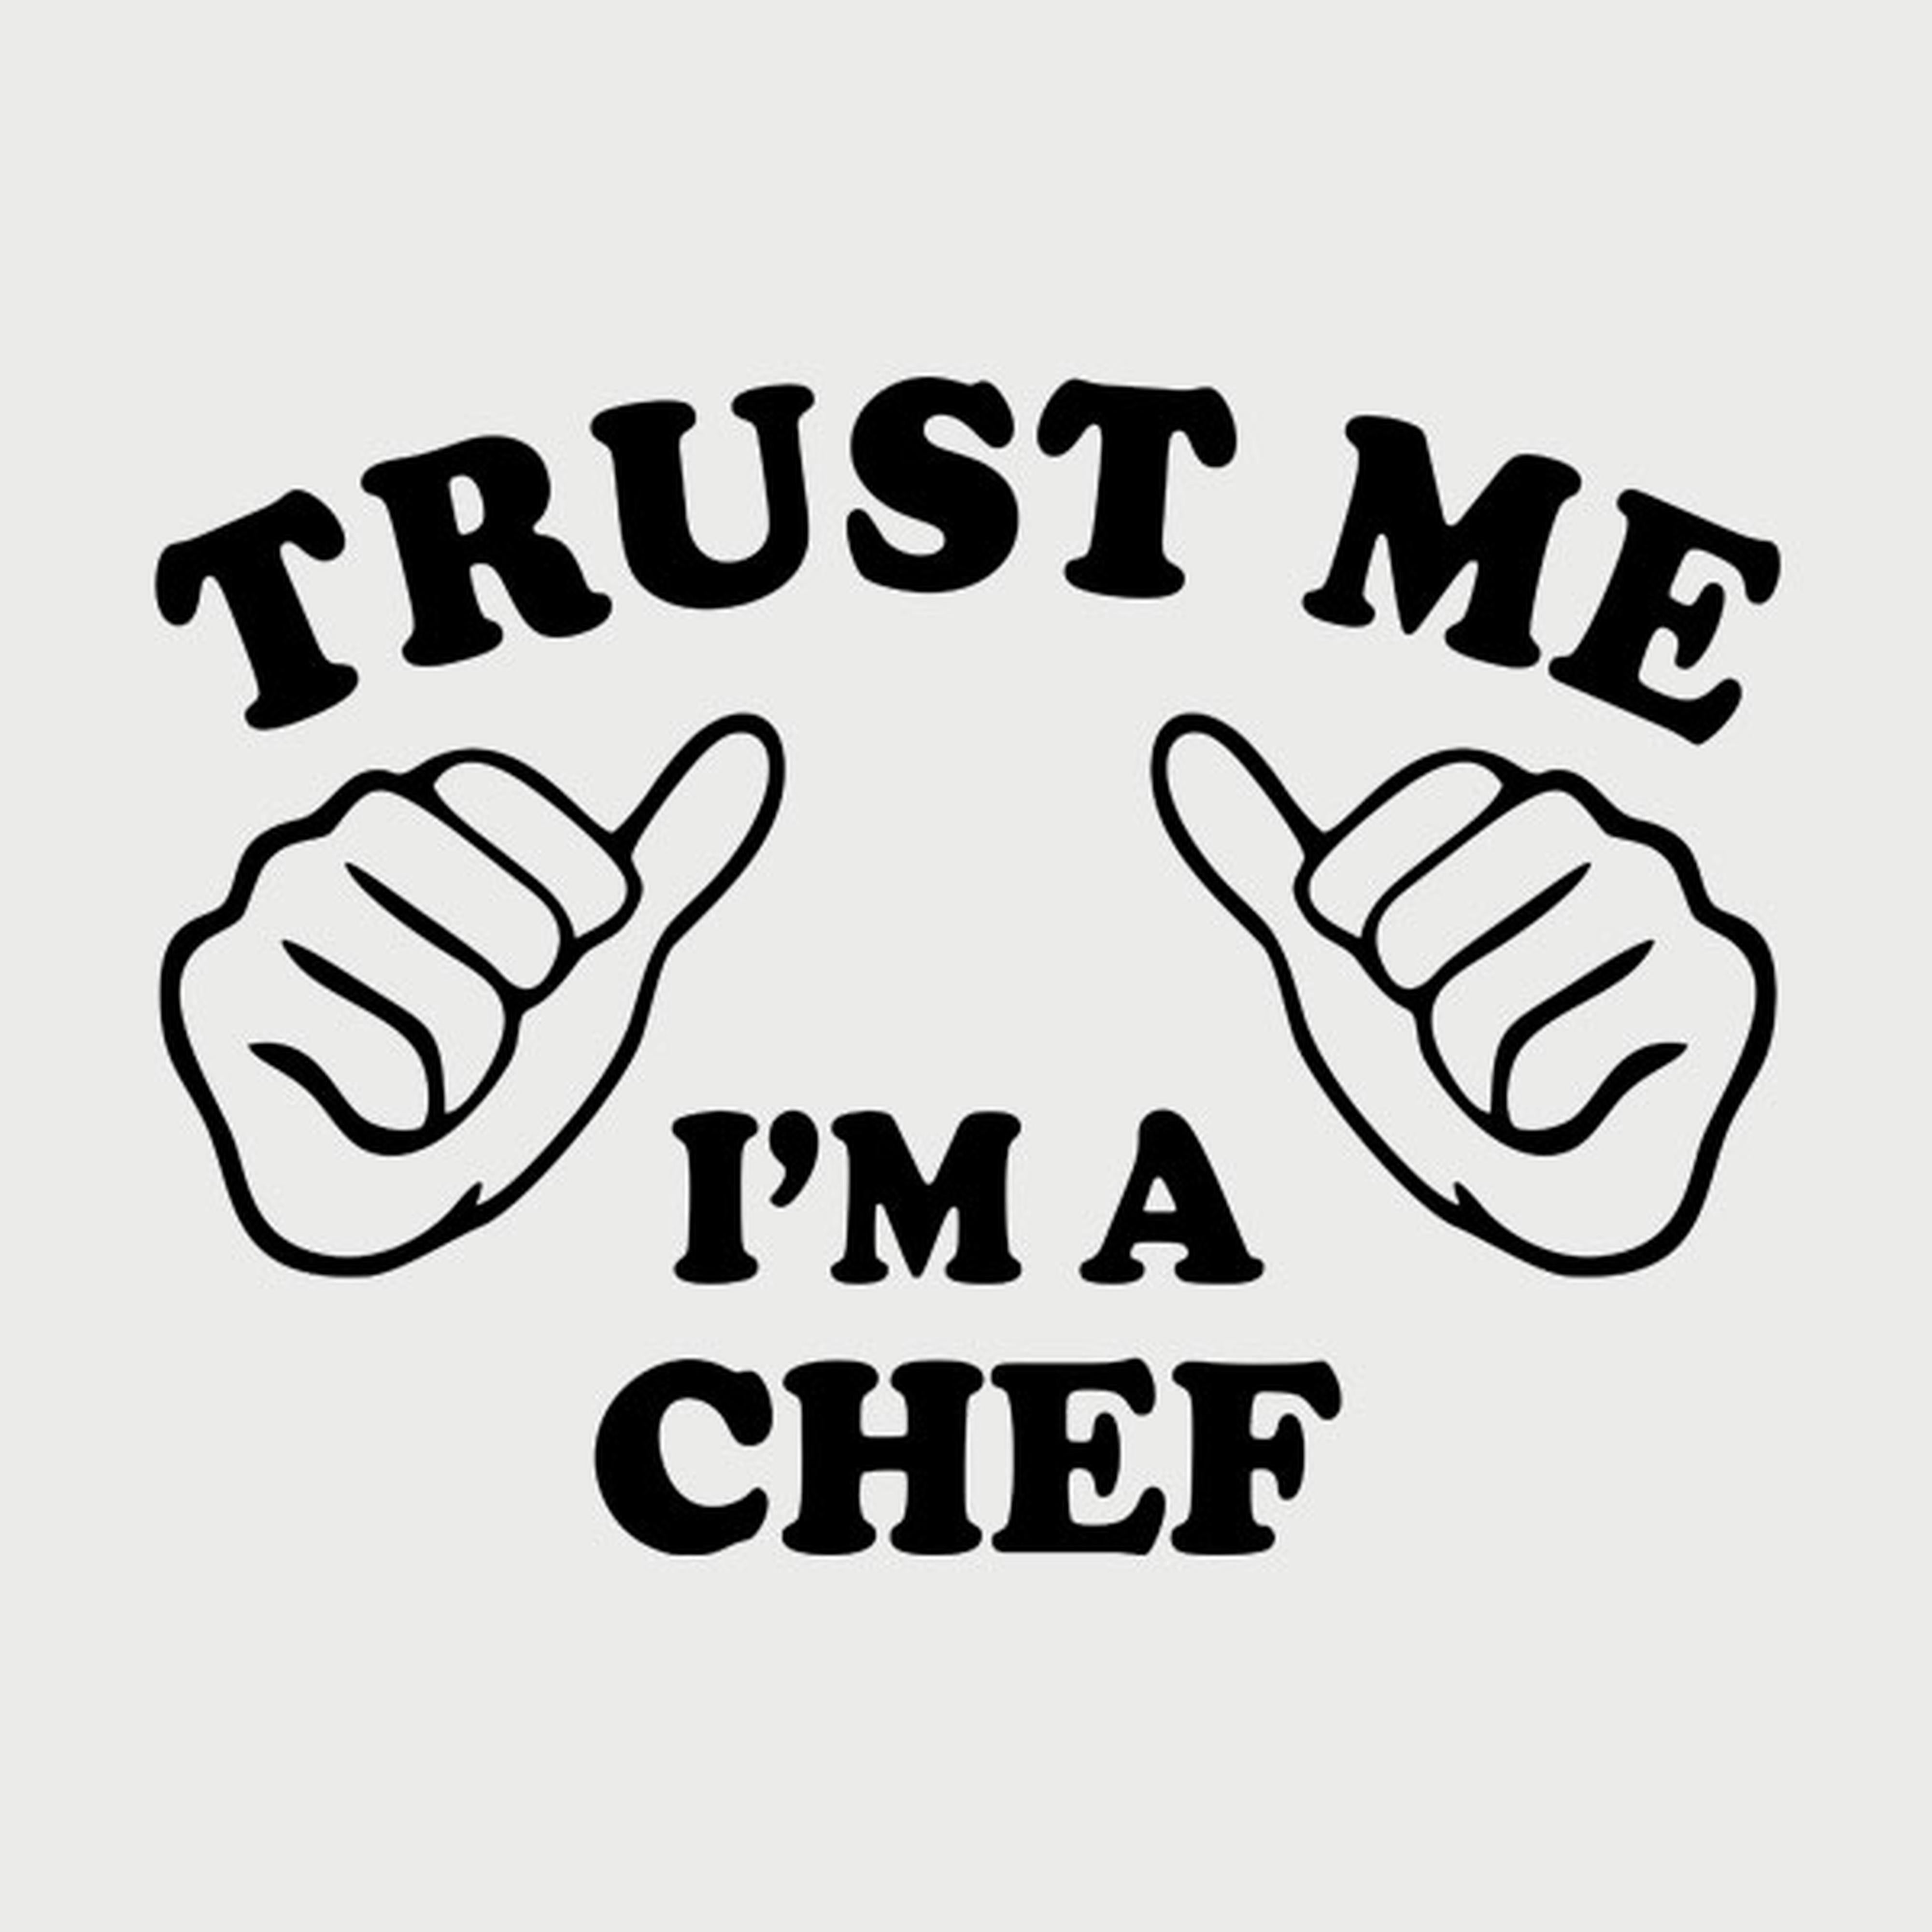 Trust me - I am a chef